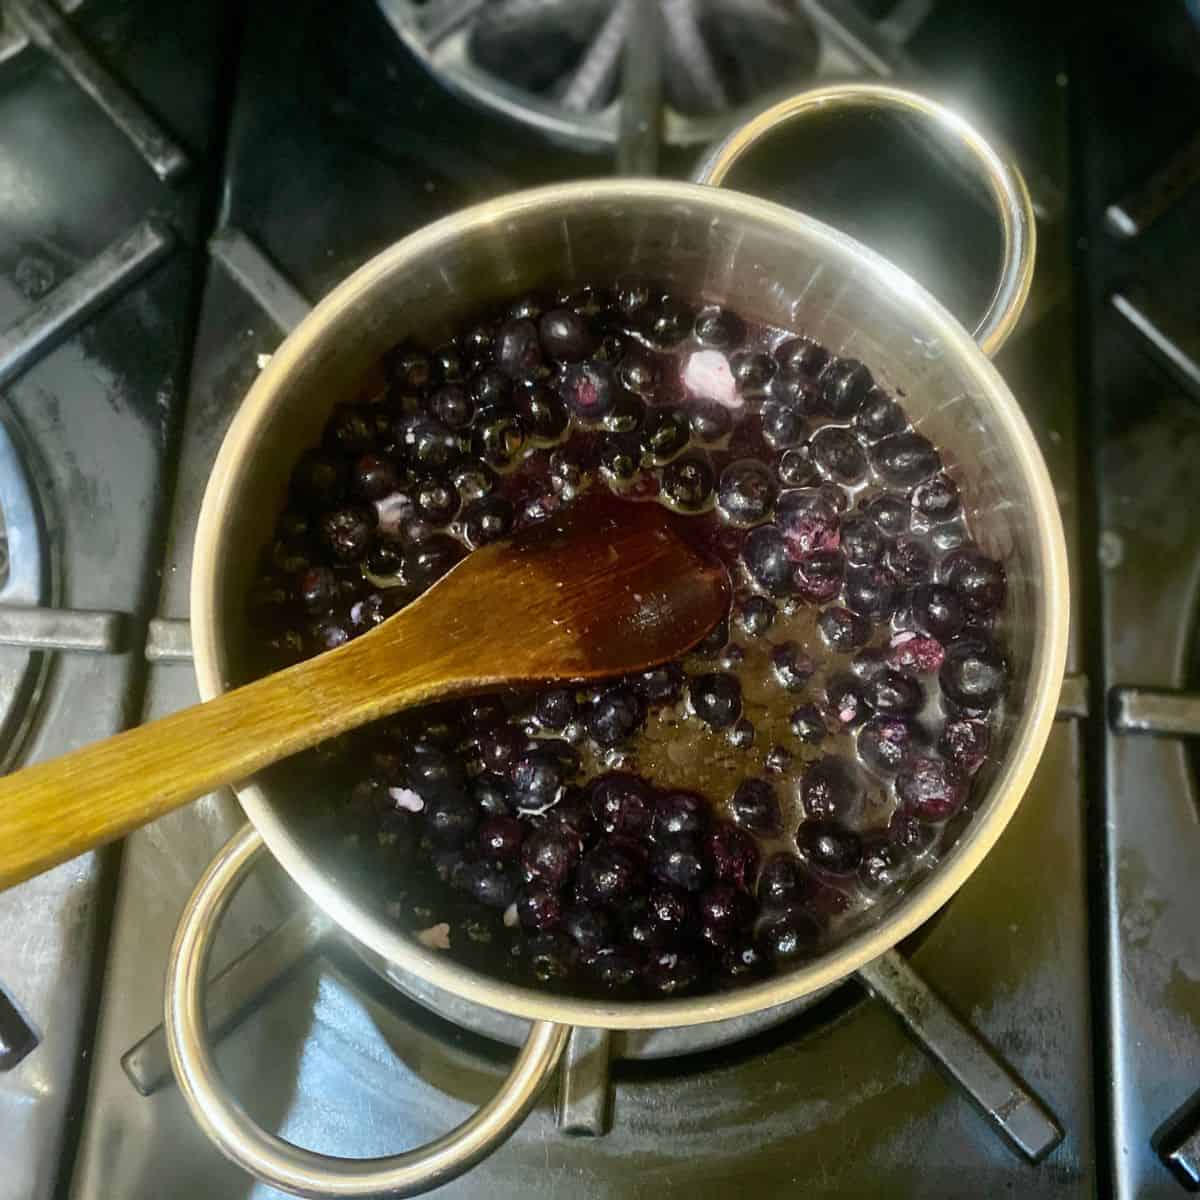 Cook the berries, lemon juice, and a pinch of salt in a pot until the berries break down. Stir as needed.